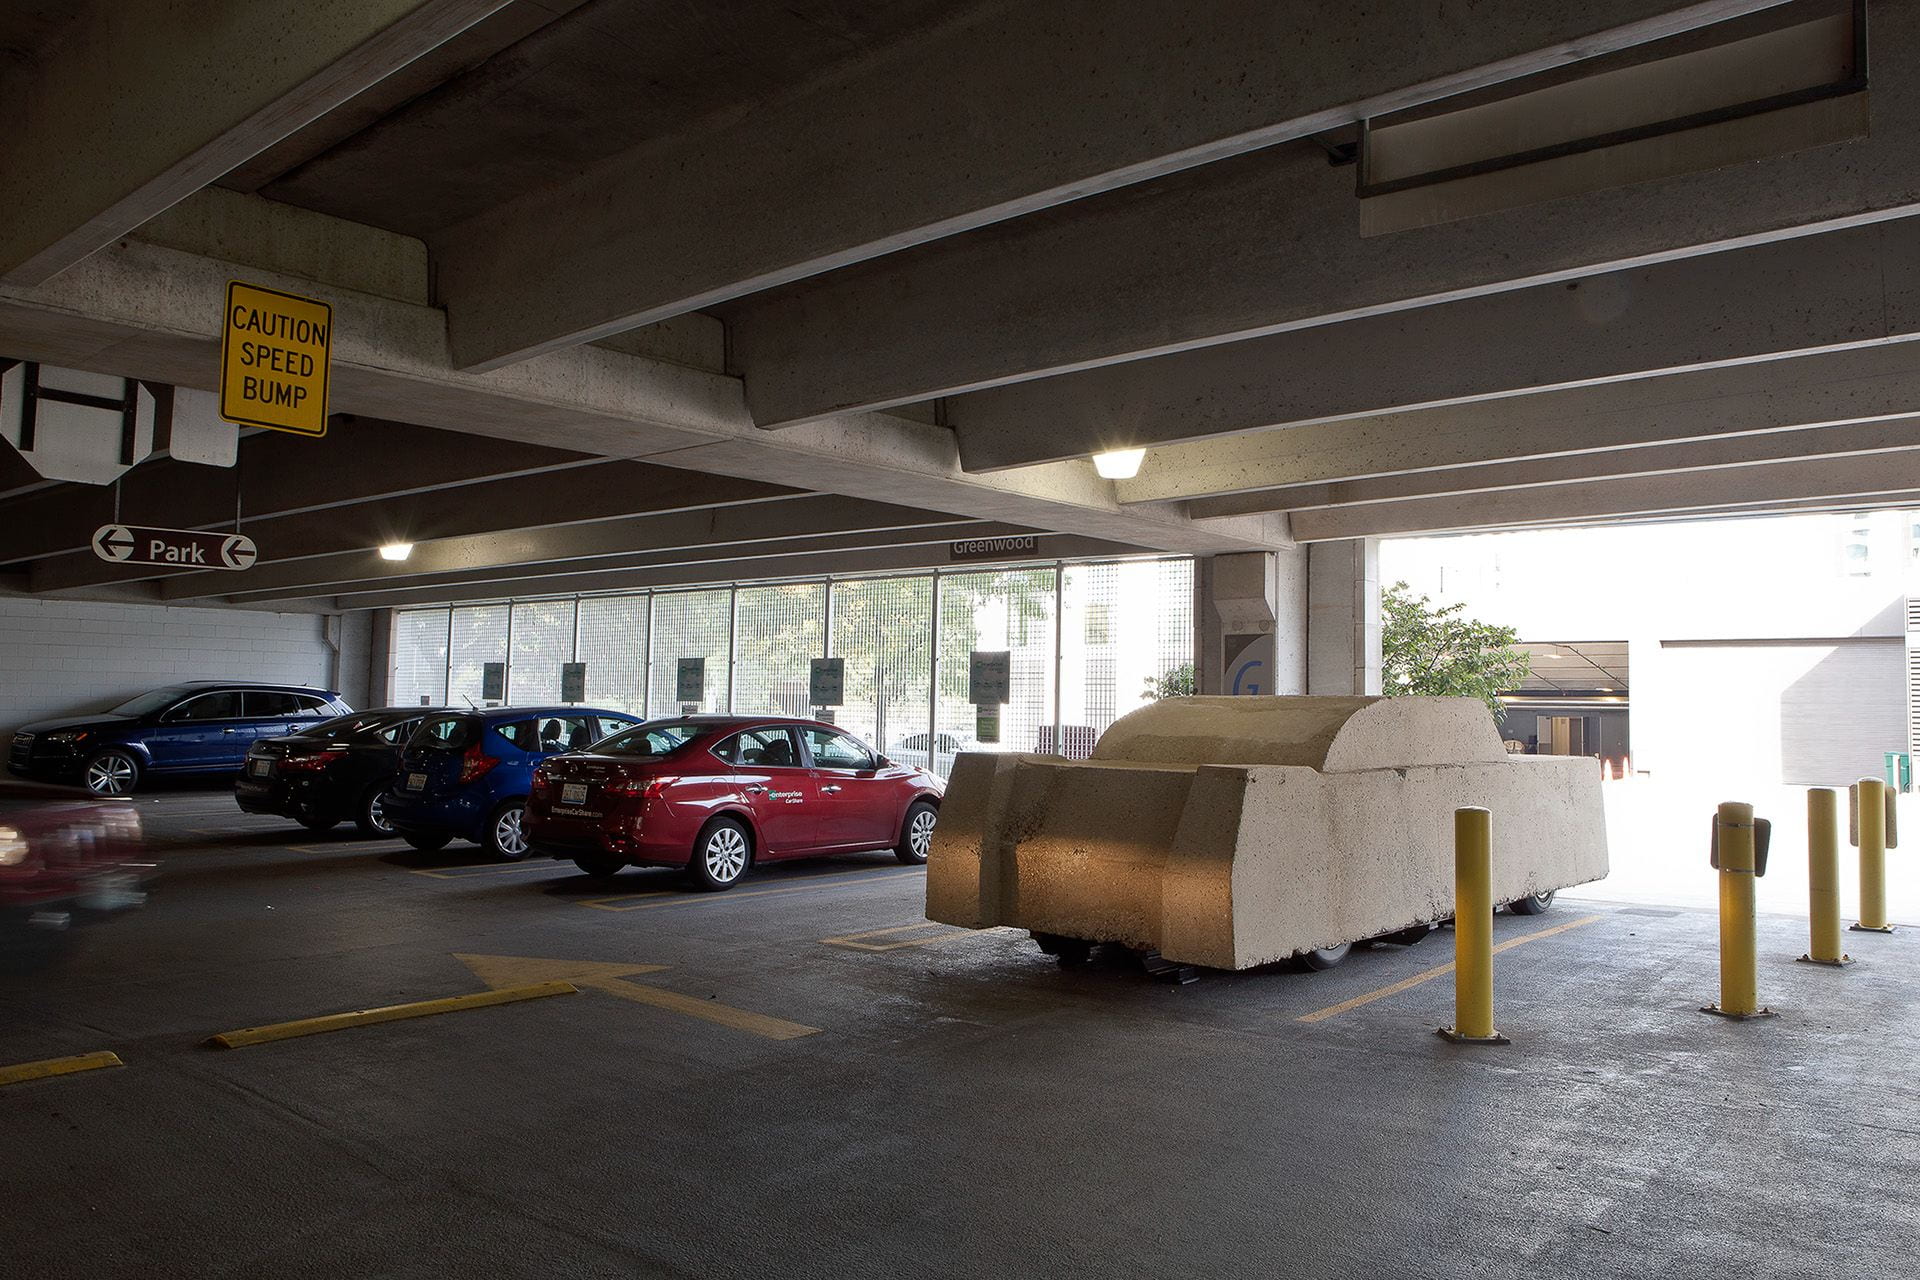 A concrete car parked in a parking garage